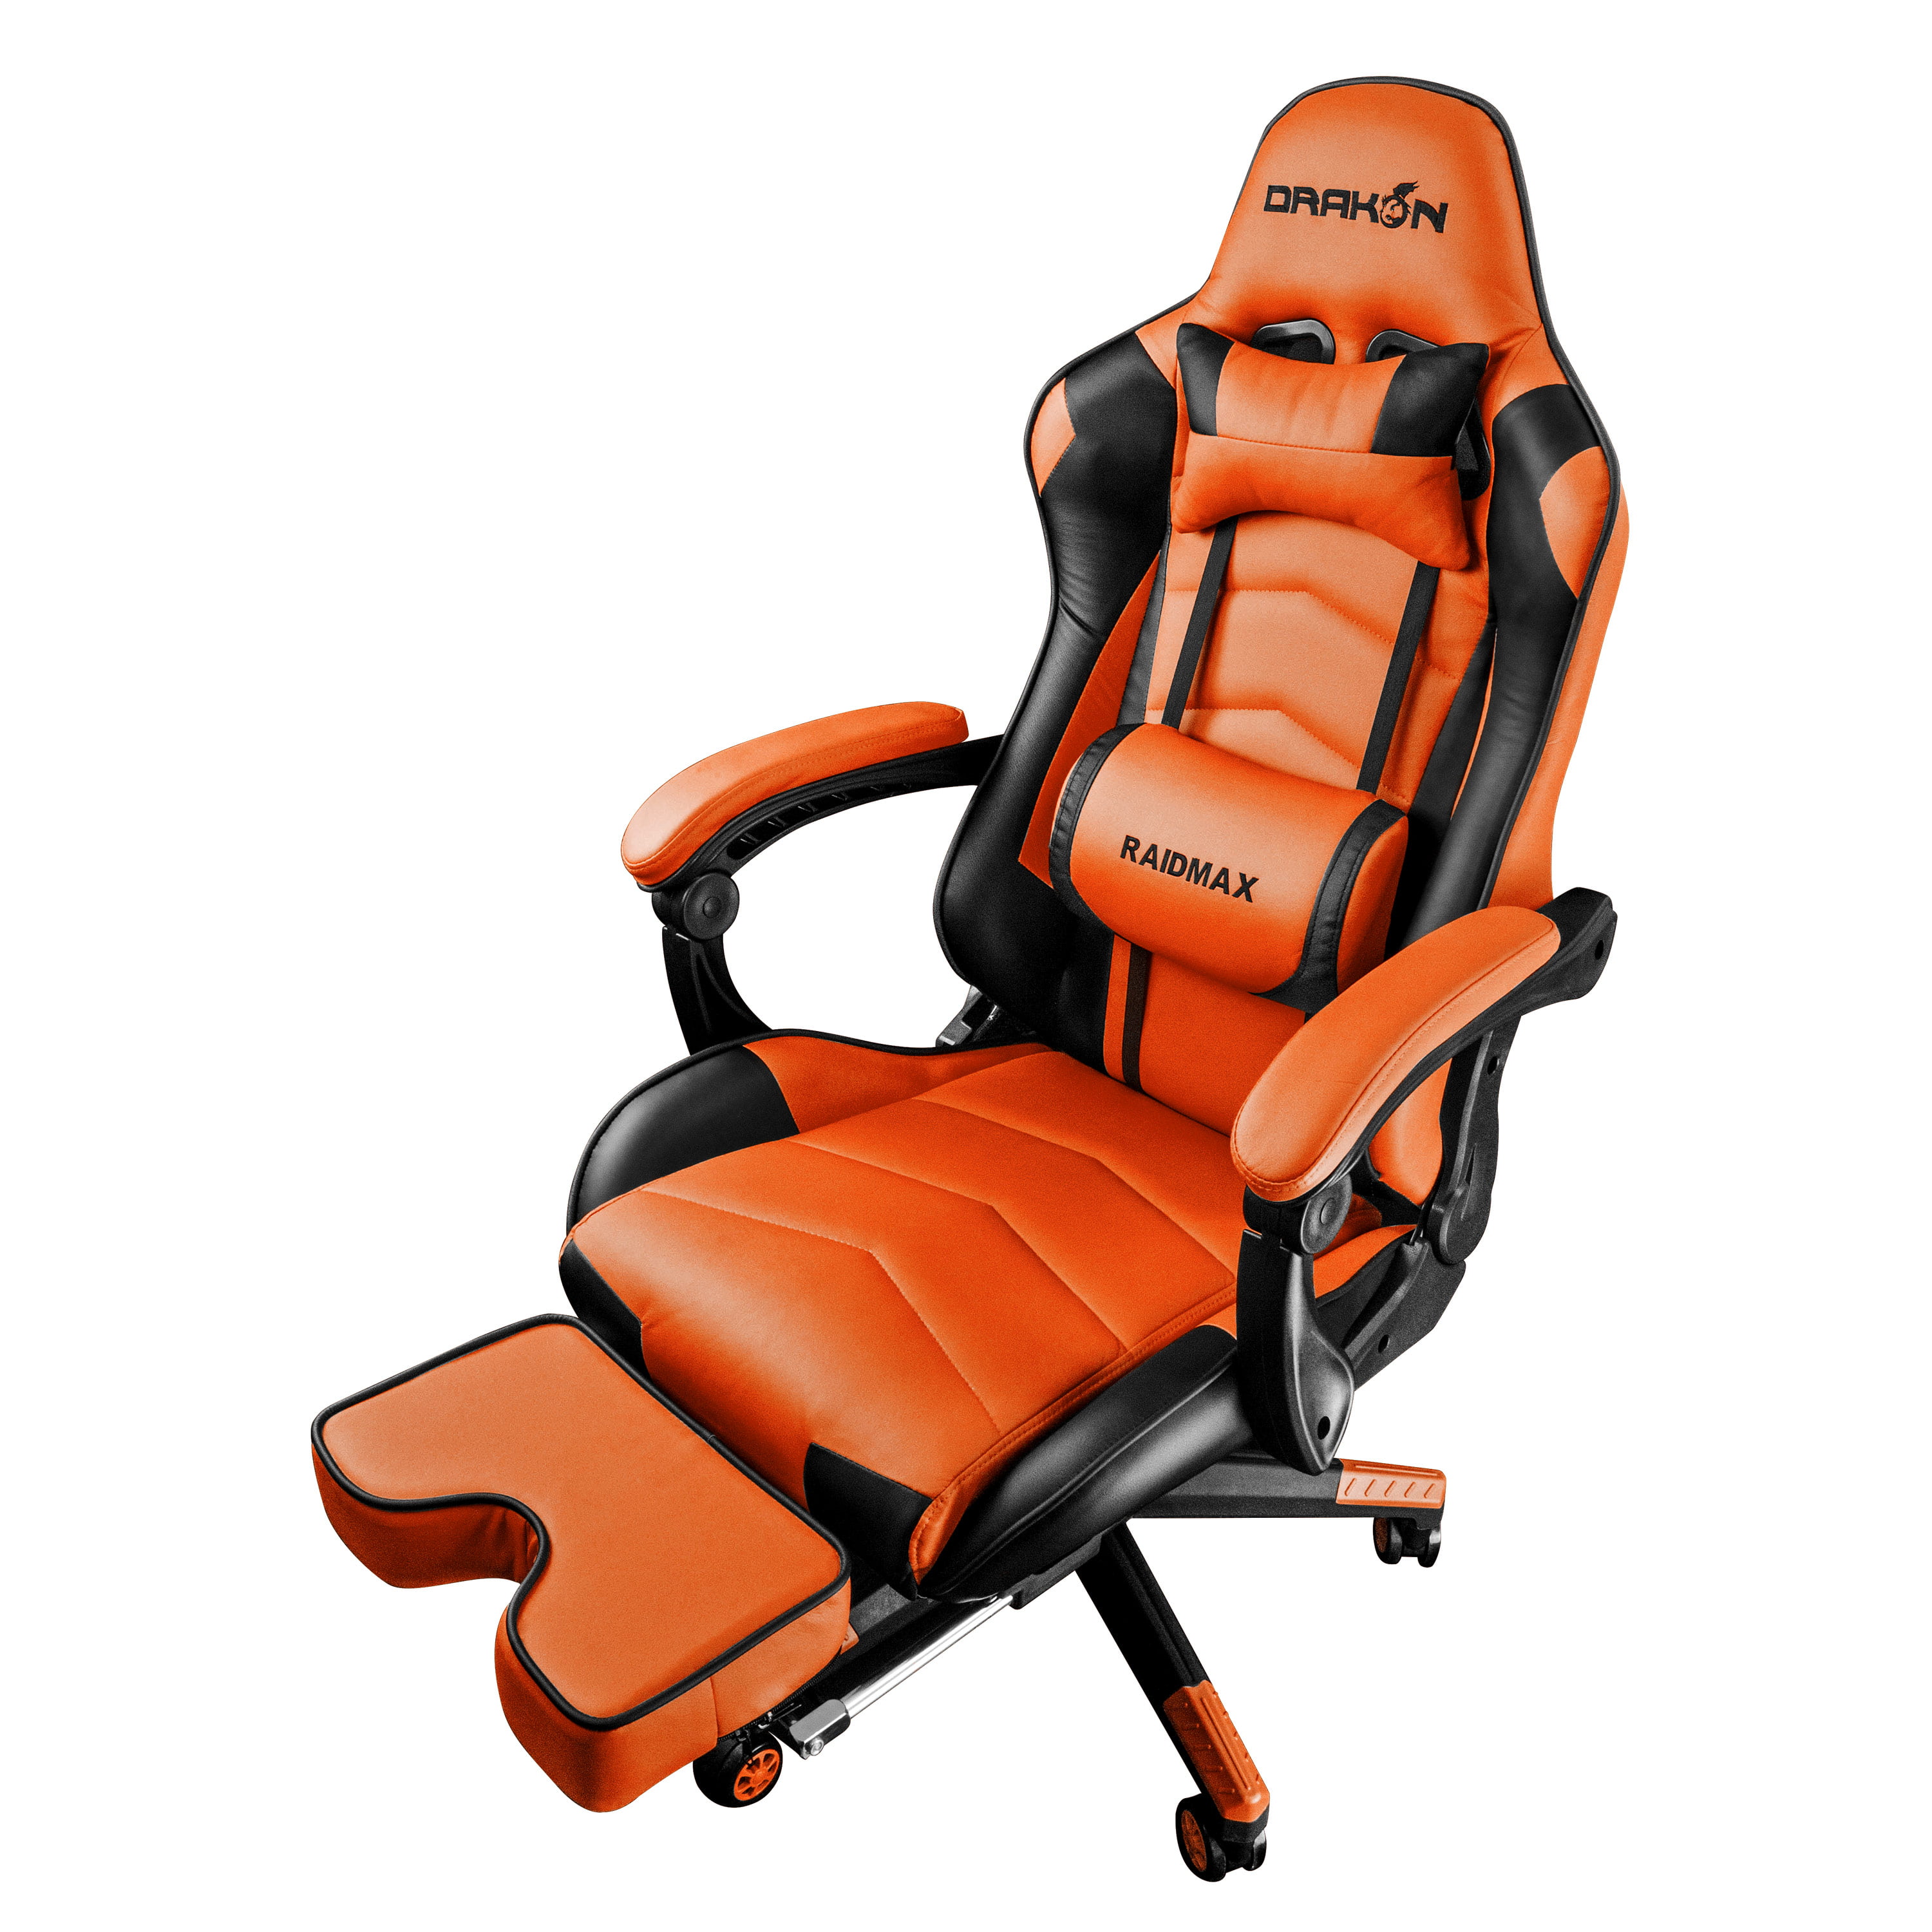 Drakon DK709 Gaming Chair Ergonomic Racing Style Pu Leather Seat